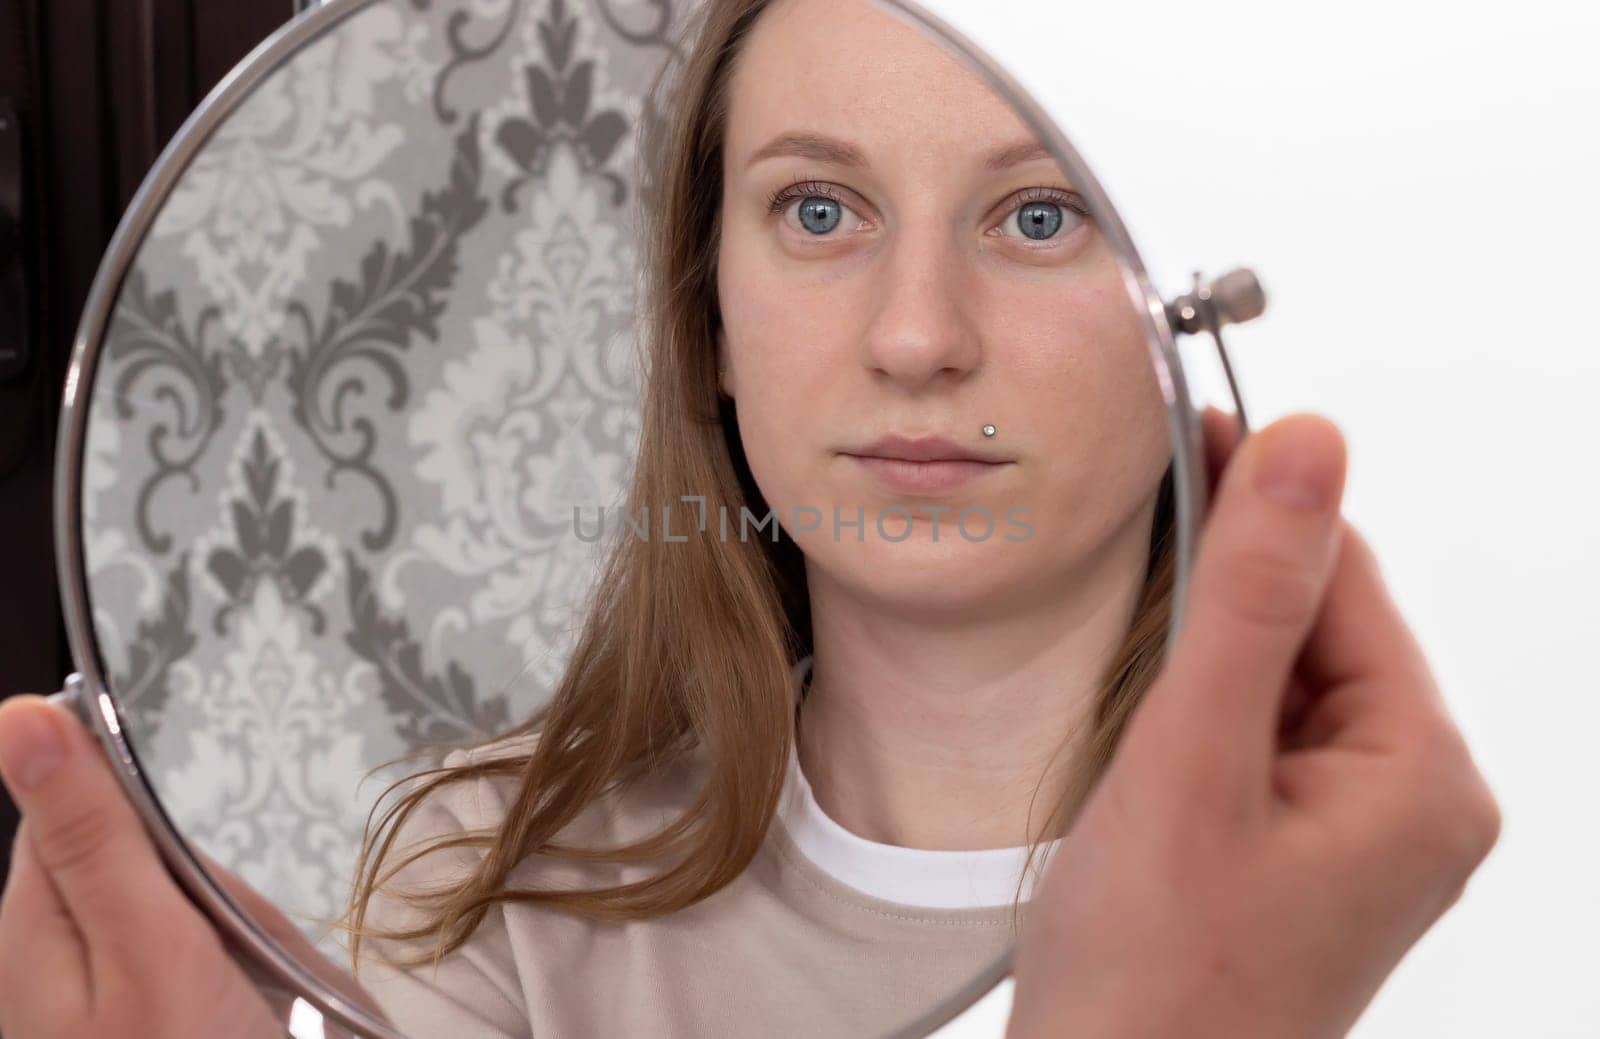 Portrait Of Caucasian Woman After Eyelash Lamination Procedure Looking At Own Reflection In Mirror. Horizontal Plane by netatsi